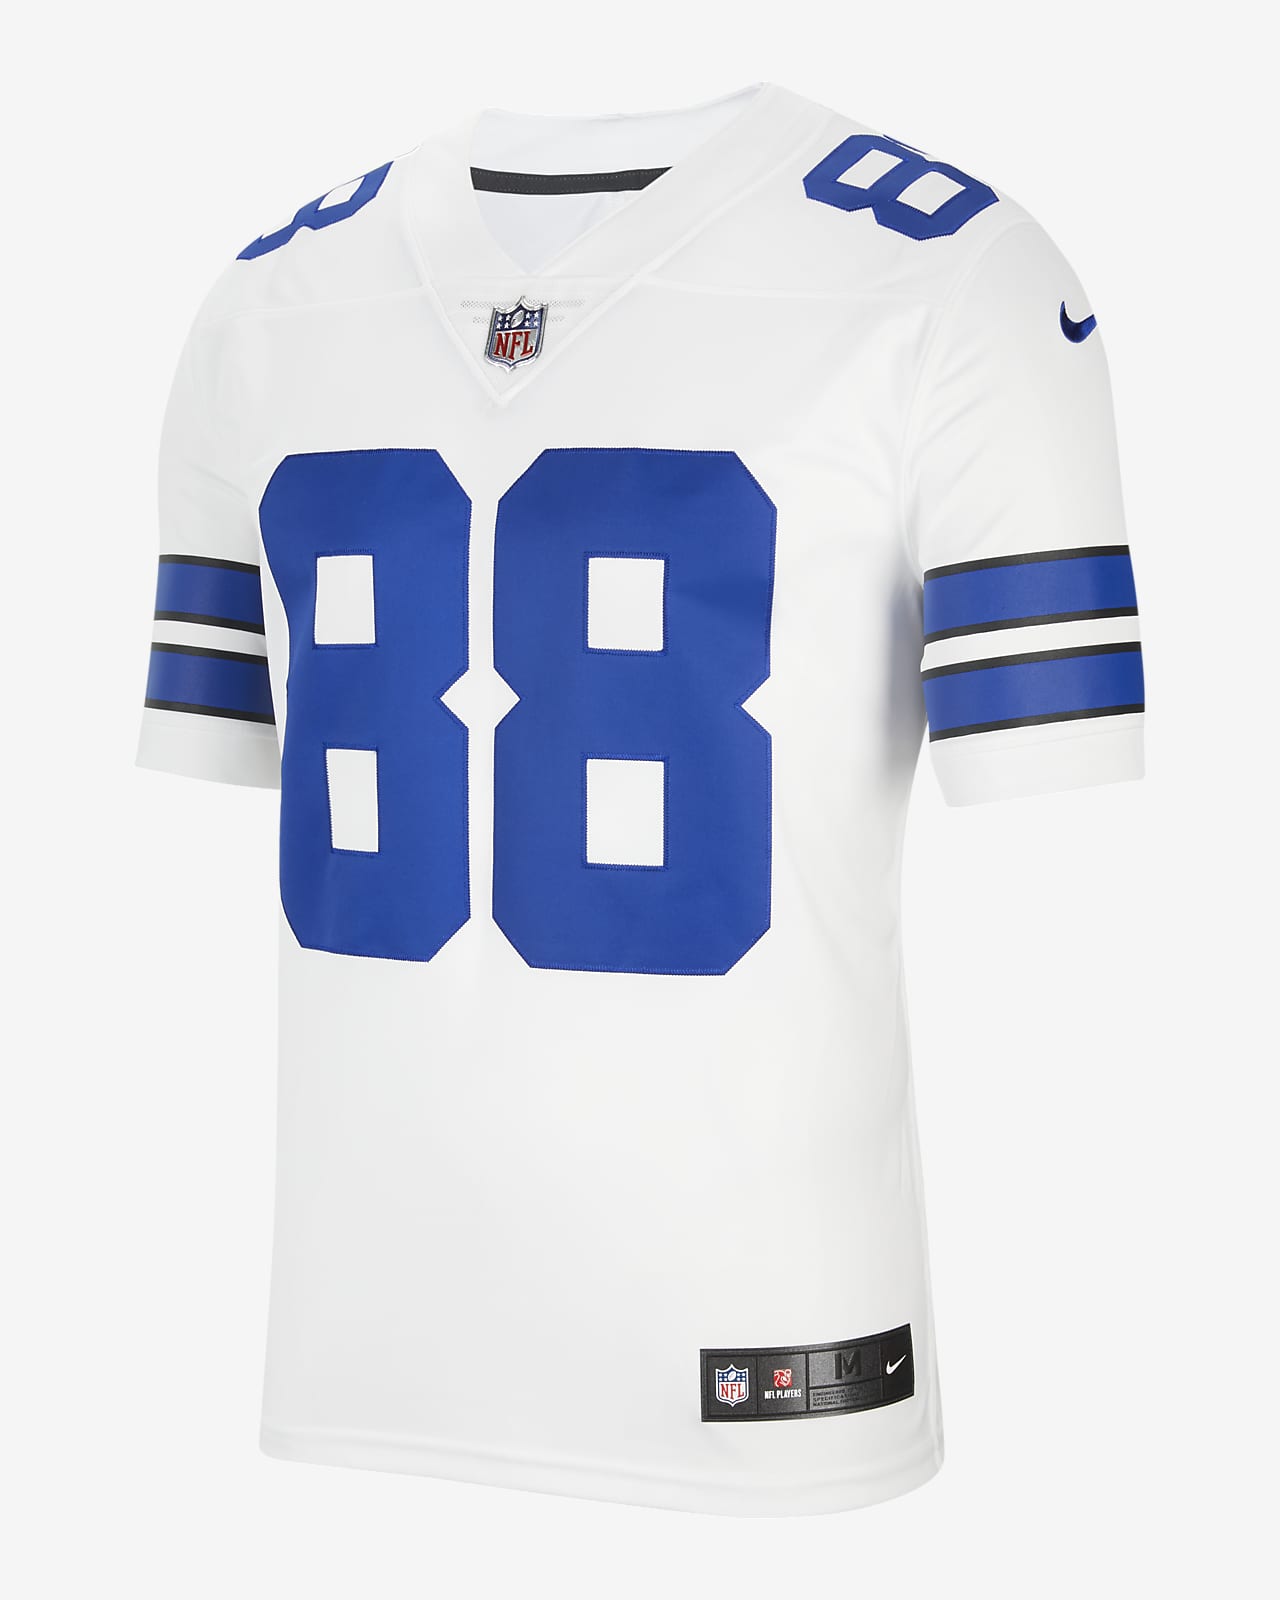 NFL Dallas Cowboys (Ceedee Lamb) Men's Game Football Jersey